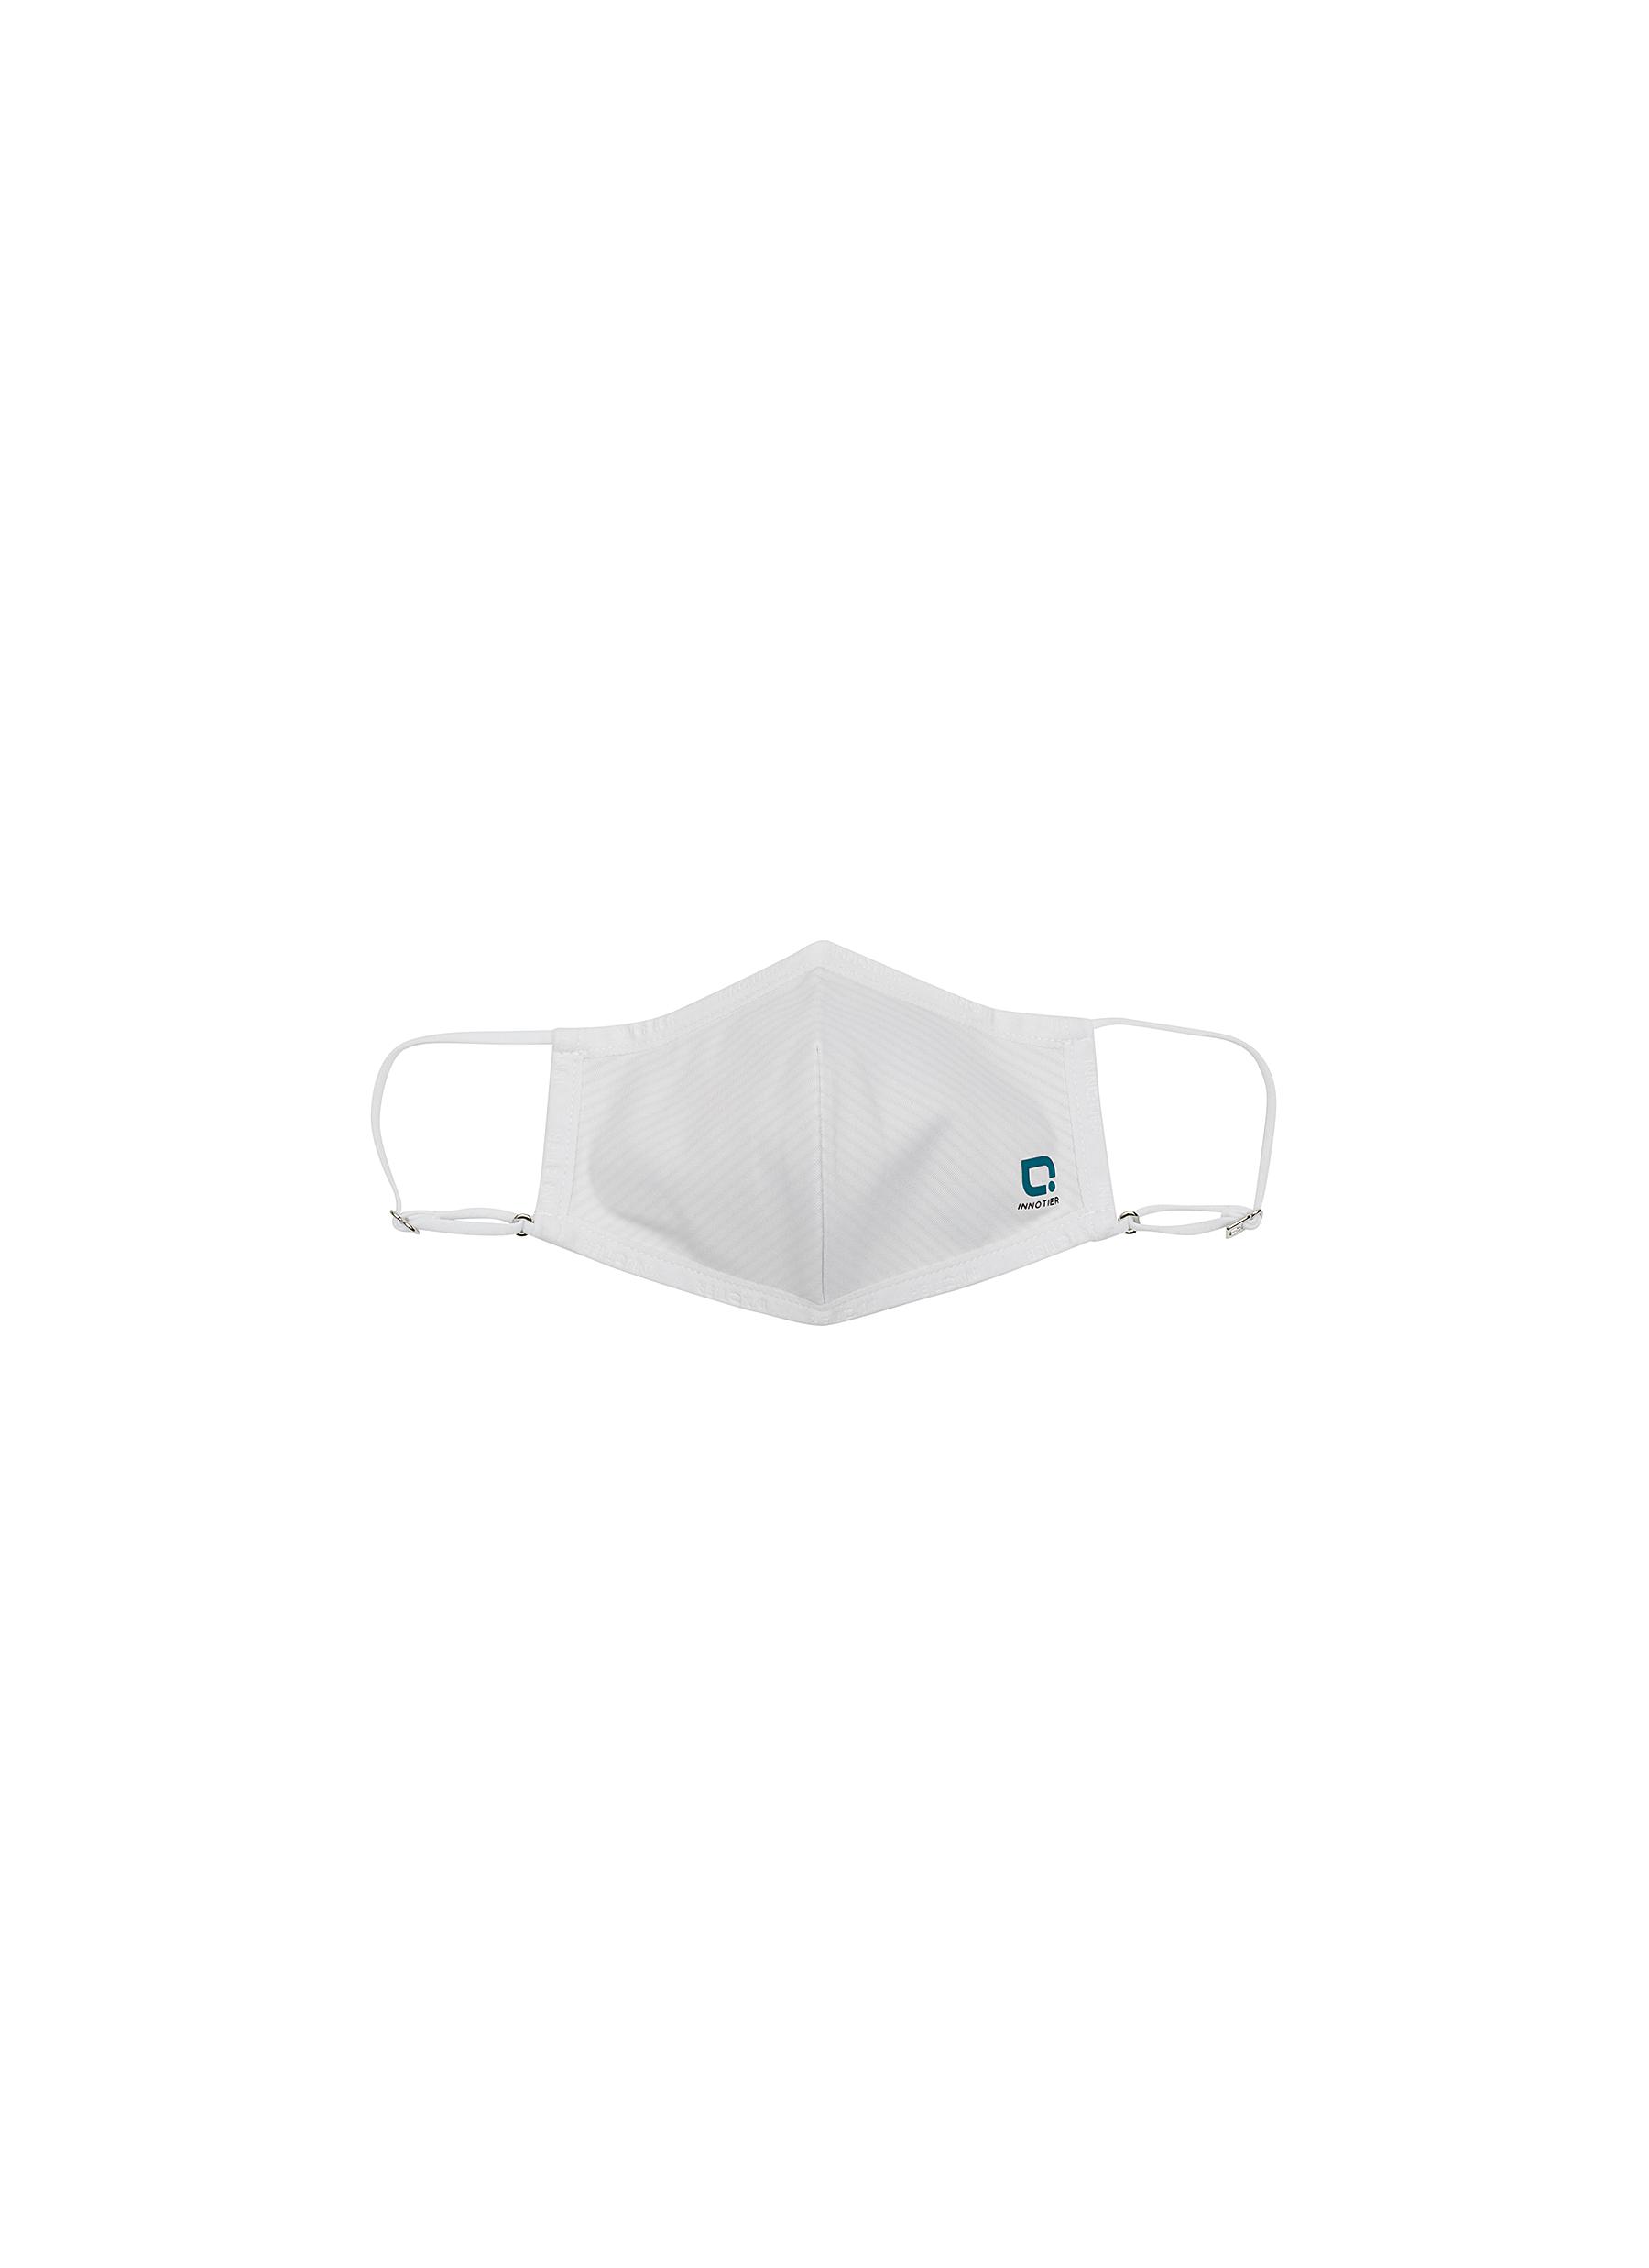 INNOTIER InnoShield Champion Series SXM99 Adult Reusable Face Mask - Off-White